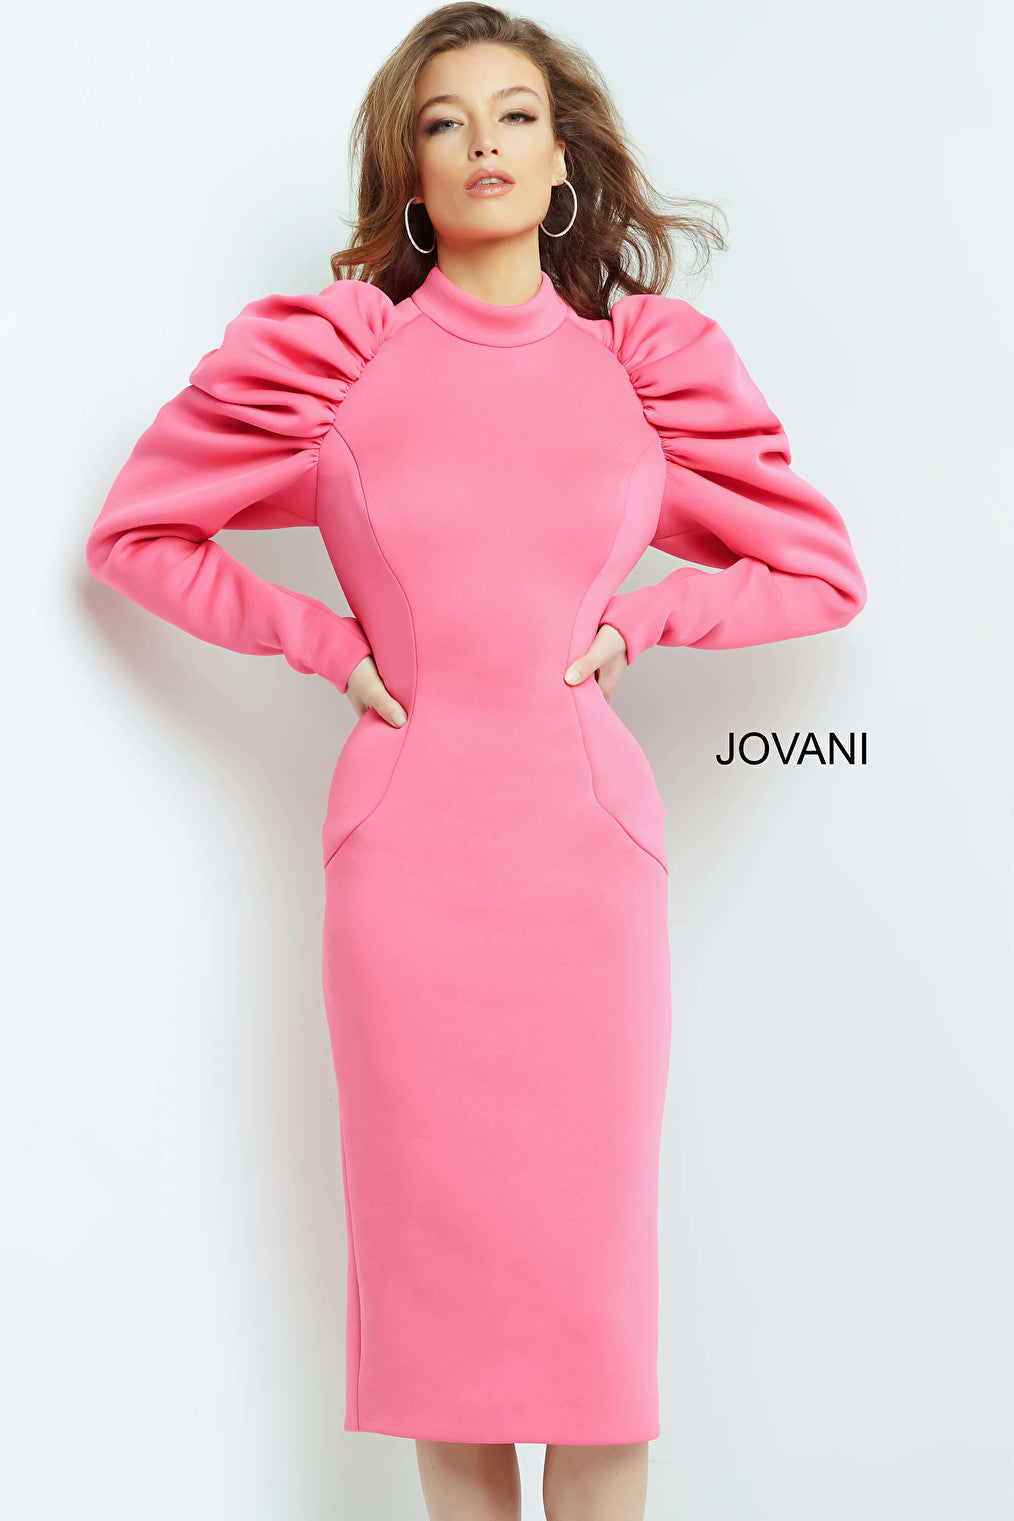 long sleeves pink dress 09355